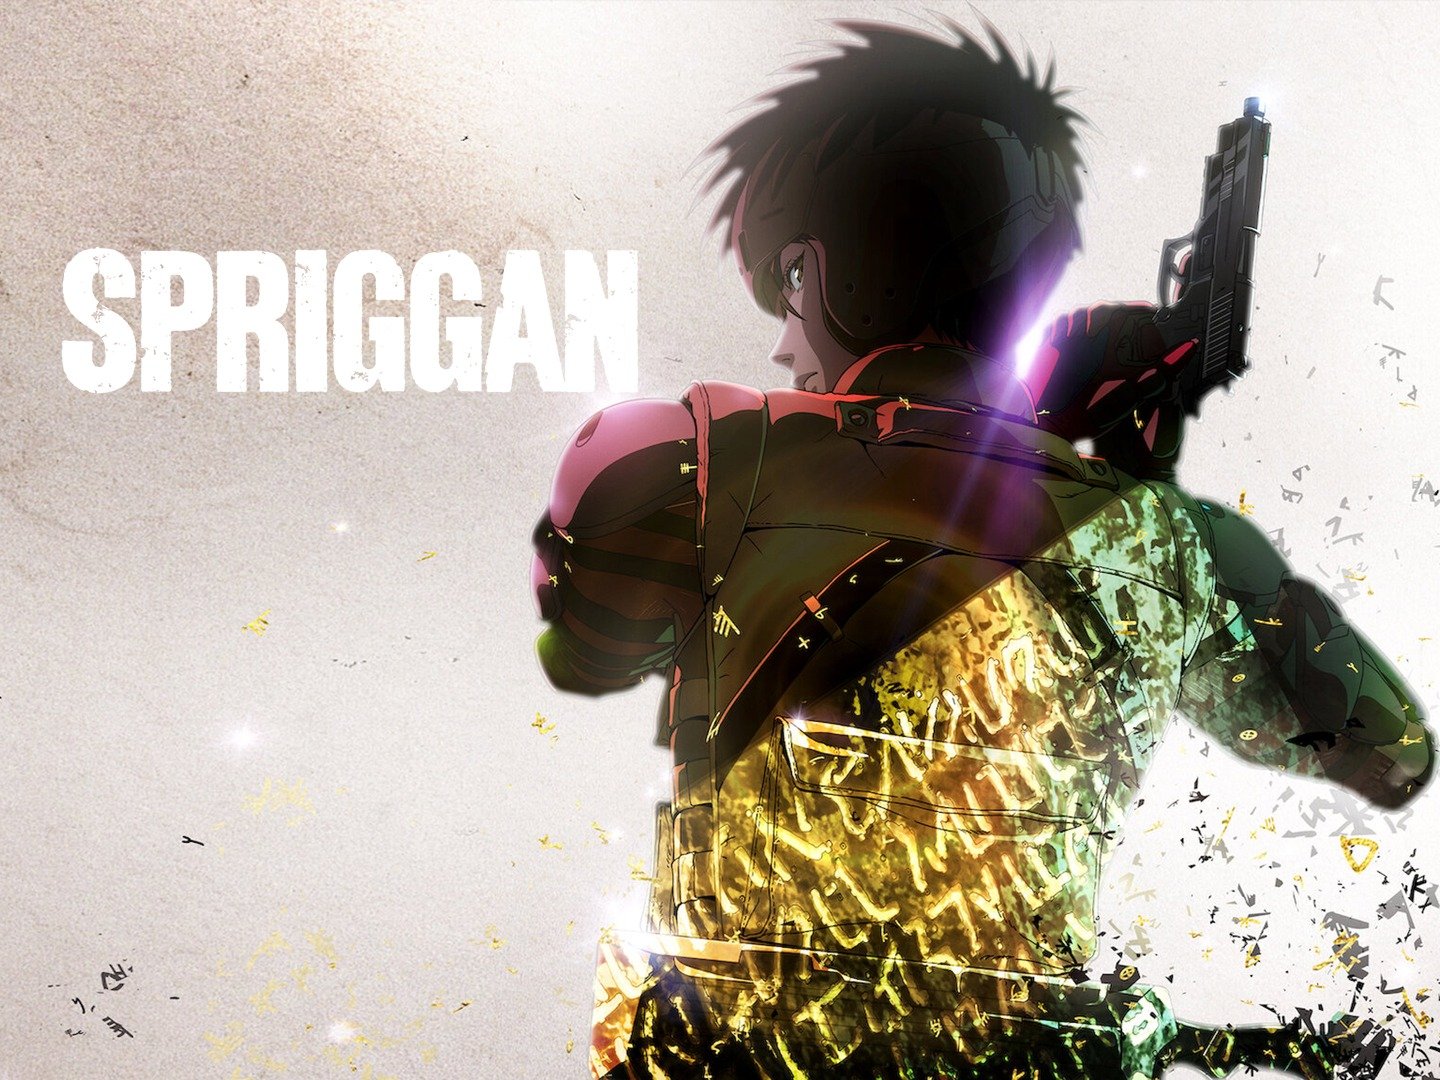 Netflixs anime adaptation of classic manga Spriggan debuts in 2022   Engadget